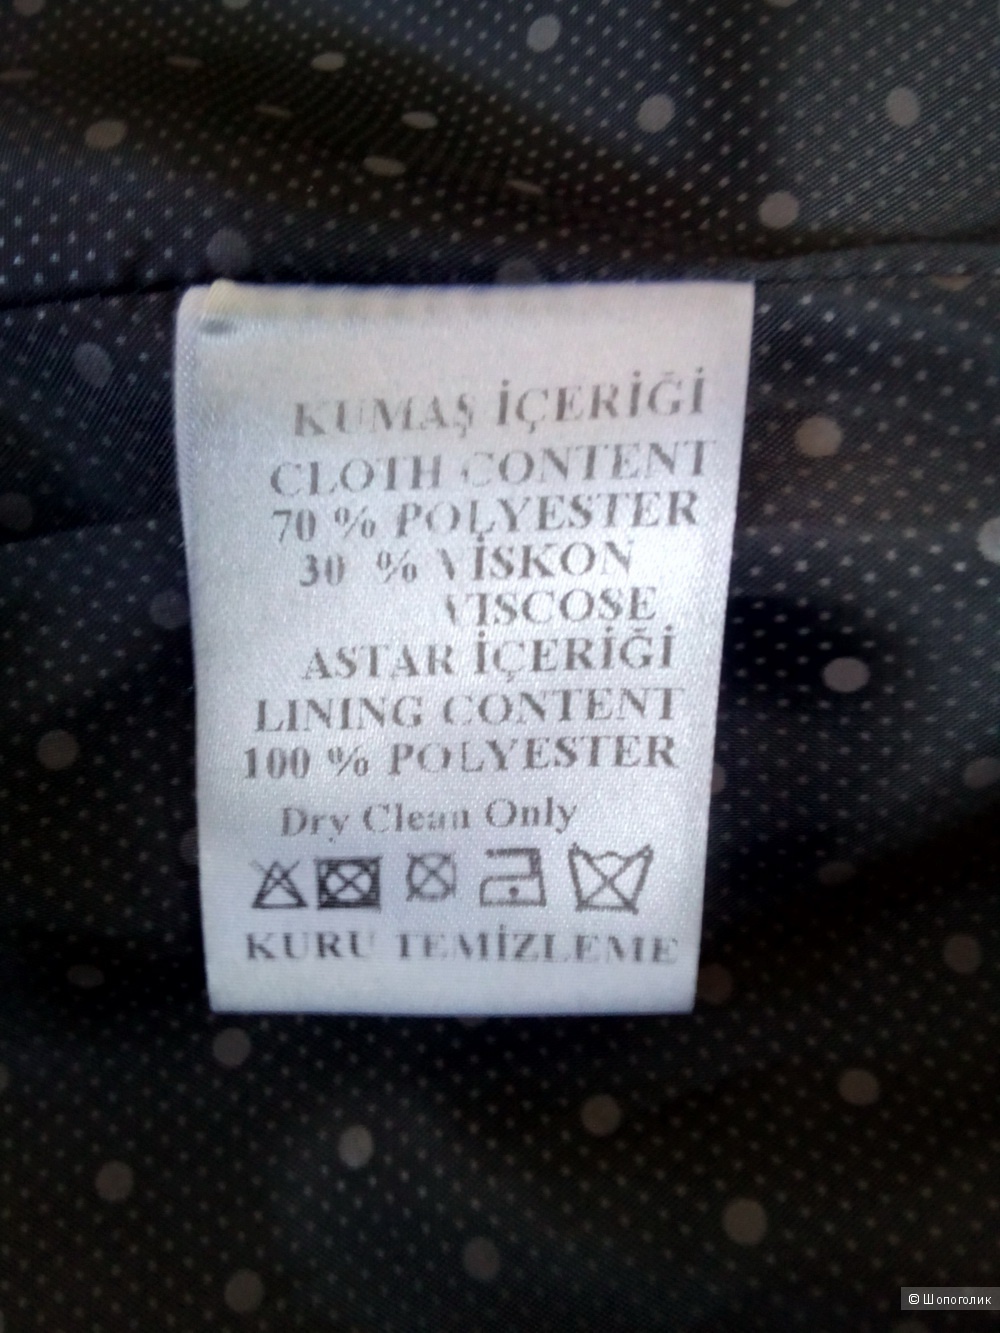 Пальто шинель ICON Турция 46 размер